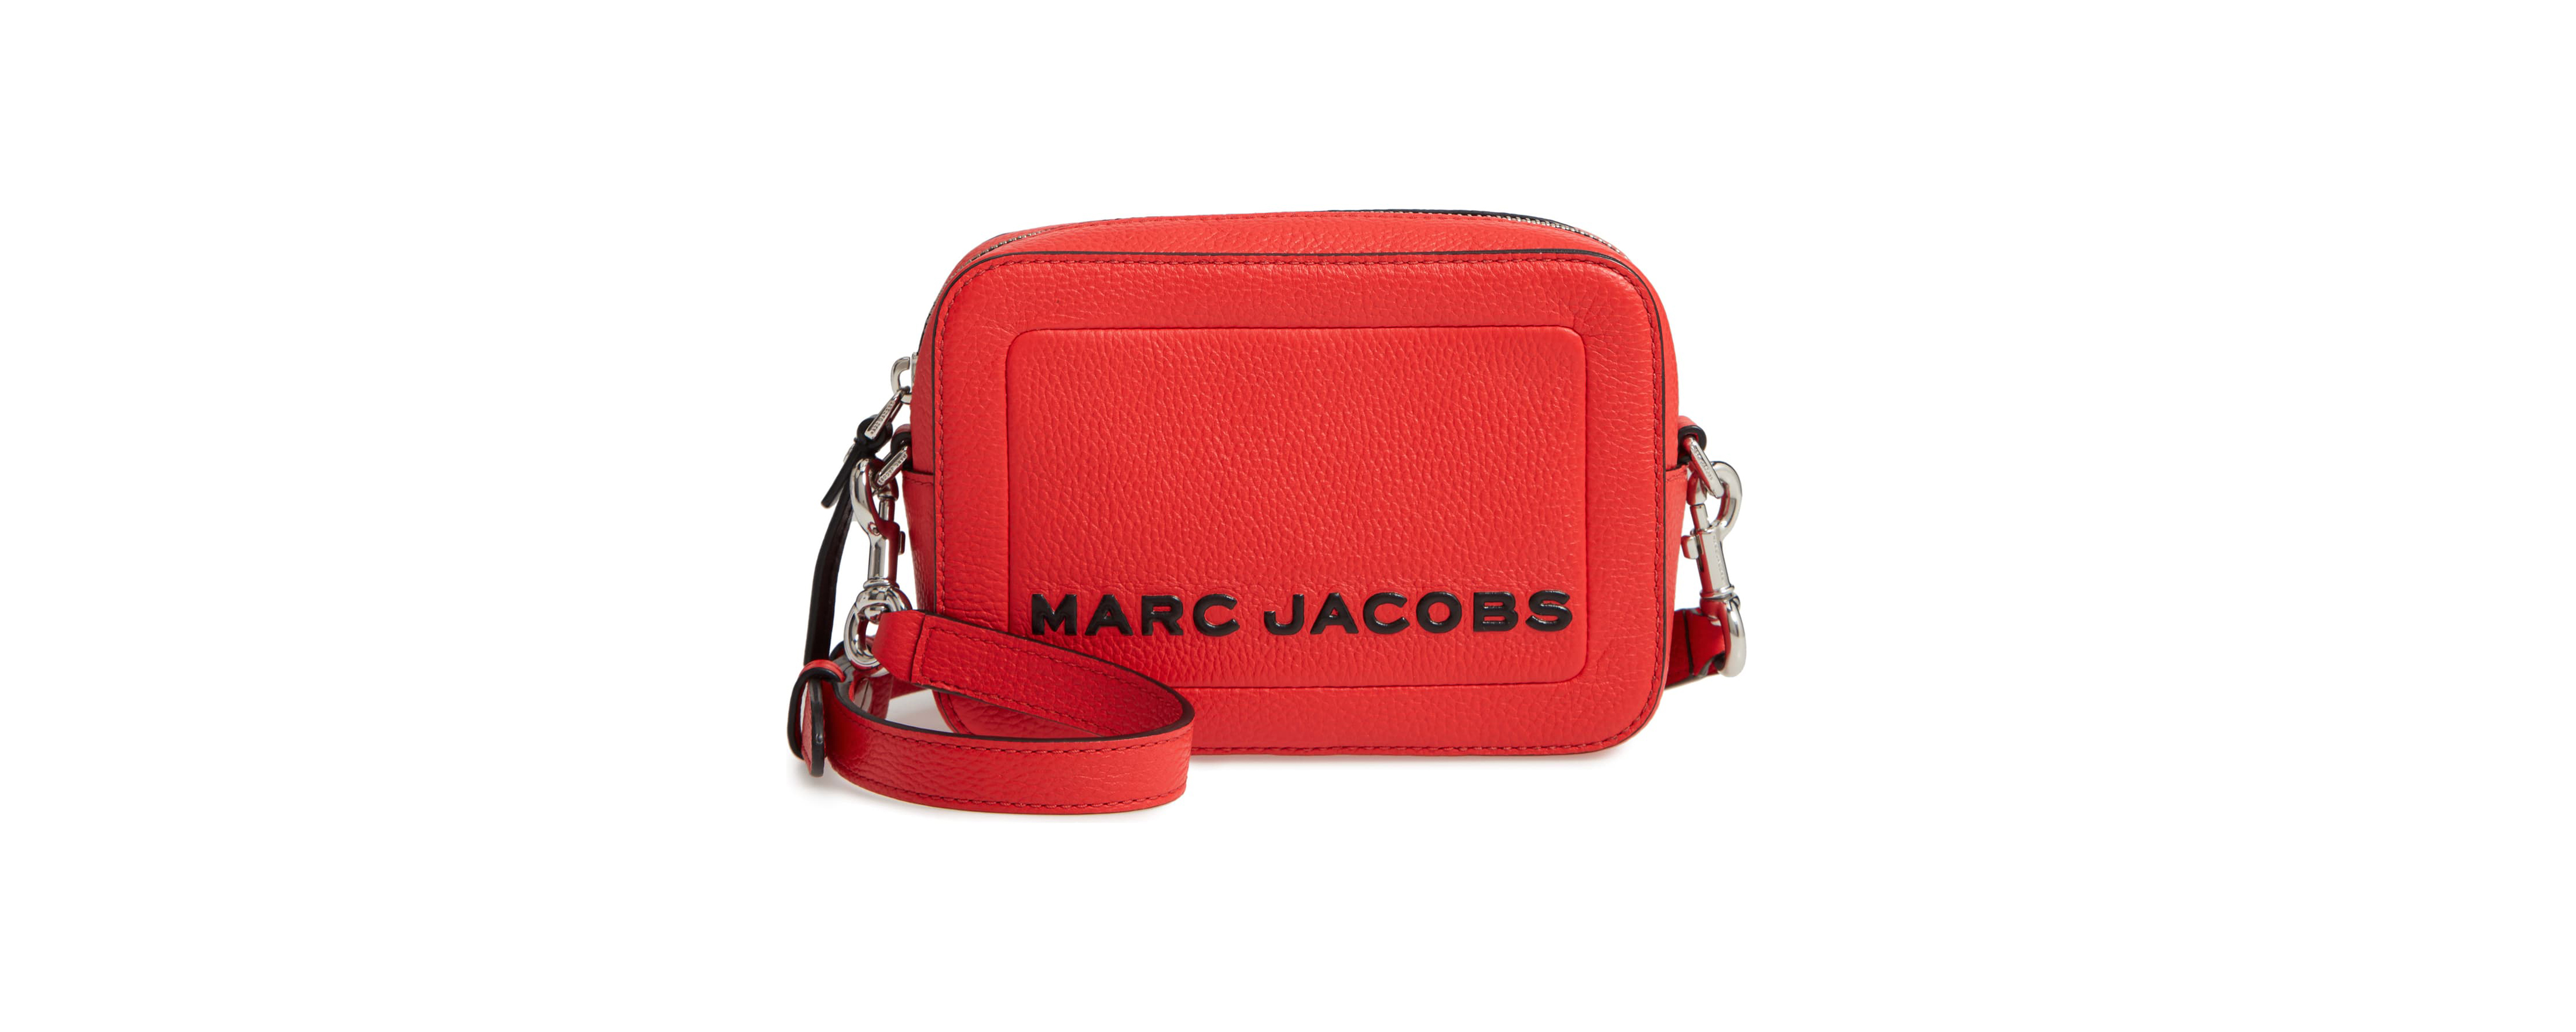 crossbody marc jacobs purse